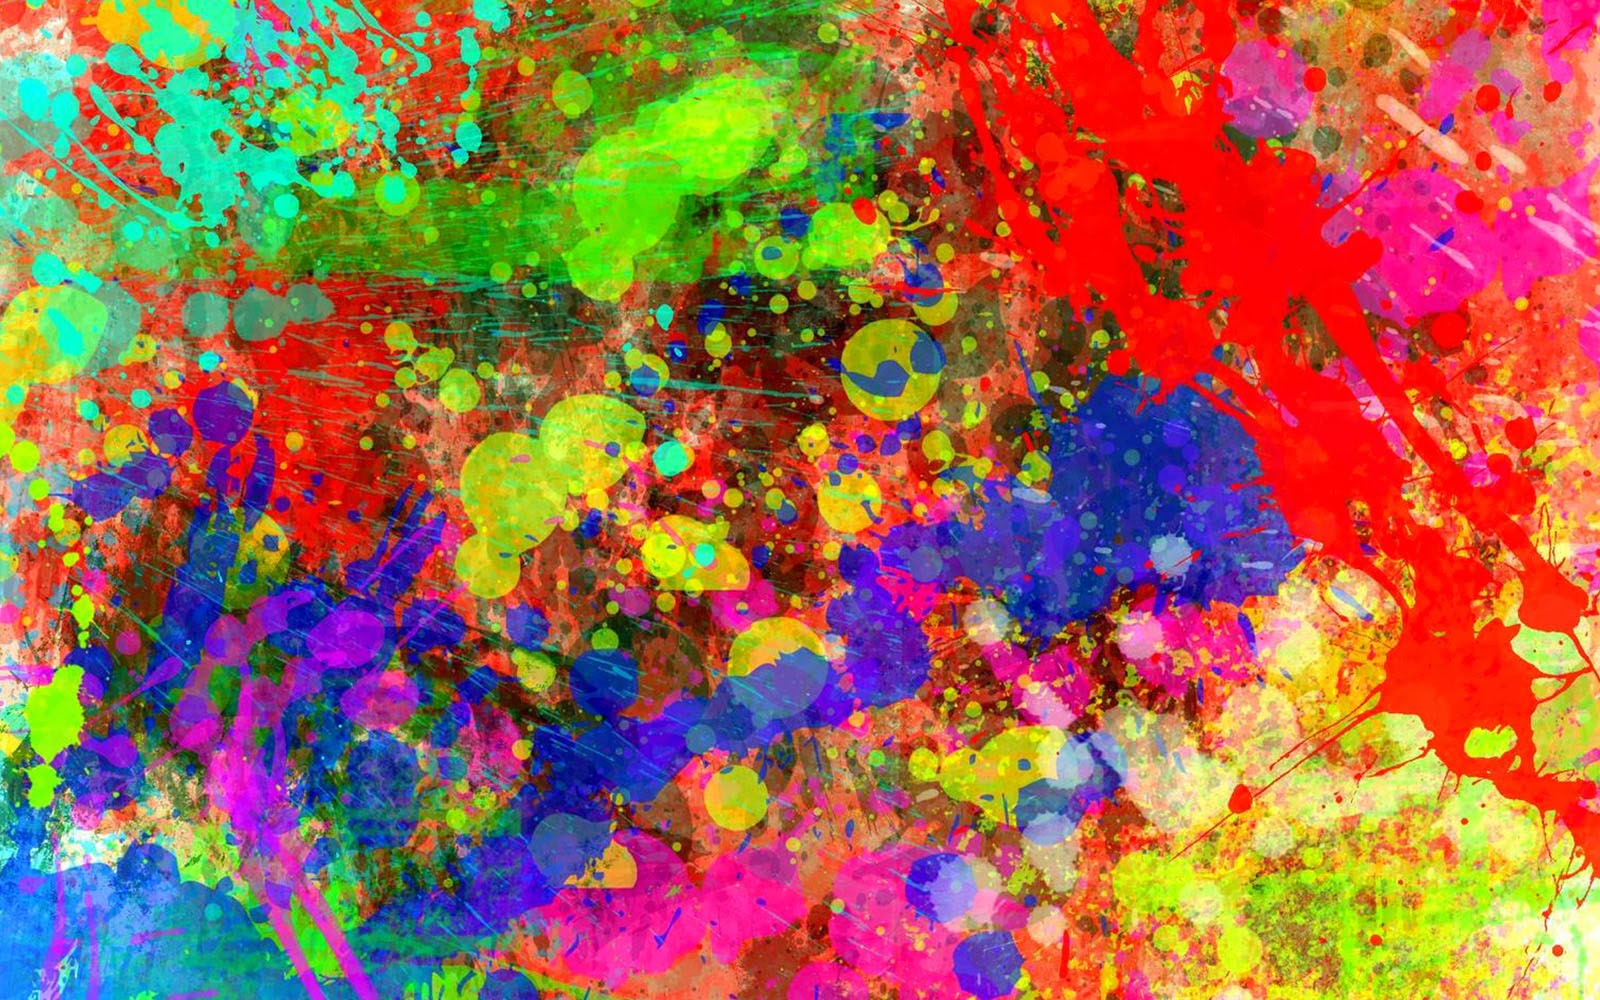 Wallpapers Color Splash Wallpapers Coloring Wallpapers Download Free Images Wallpaper [coloring654.blogspot.com]